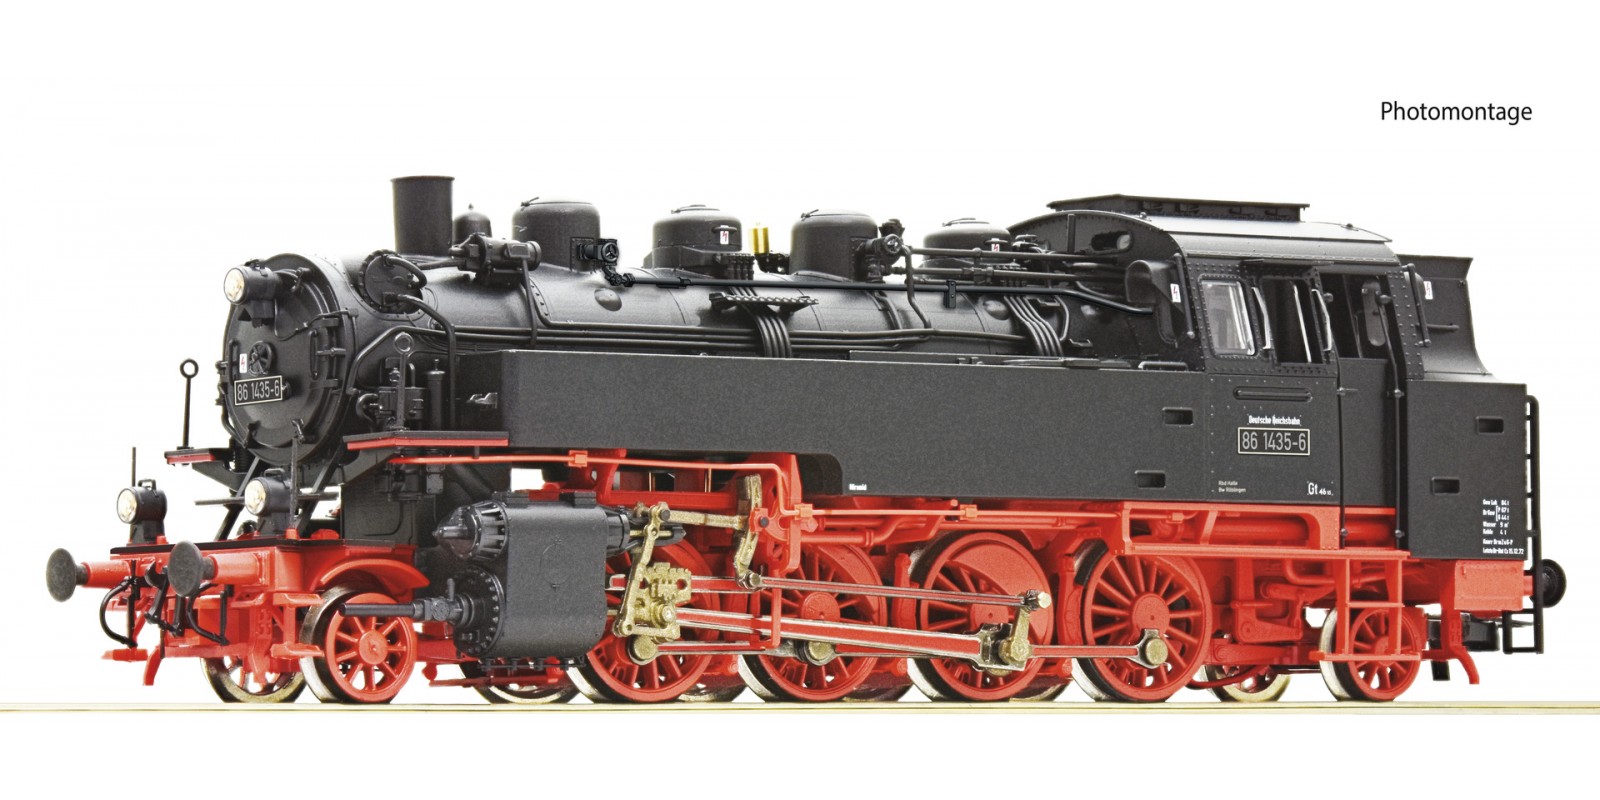 RO78022 Steam locomotive 86 1435-6, DR